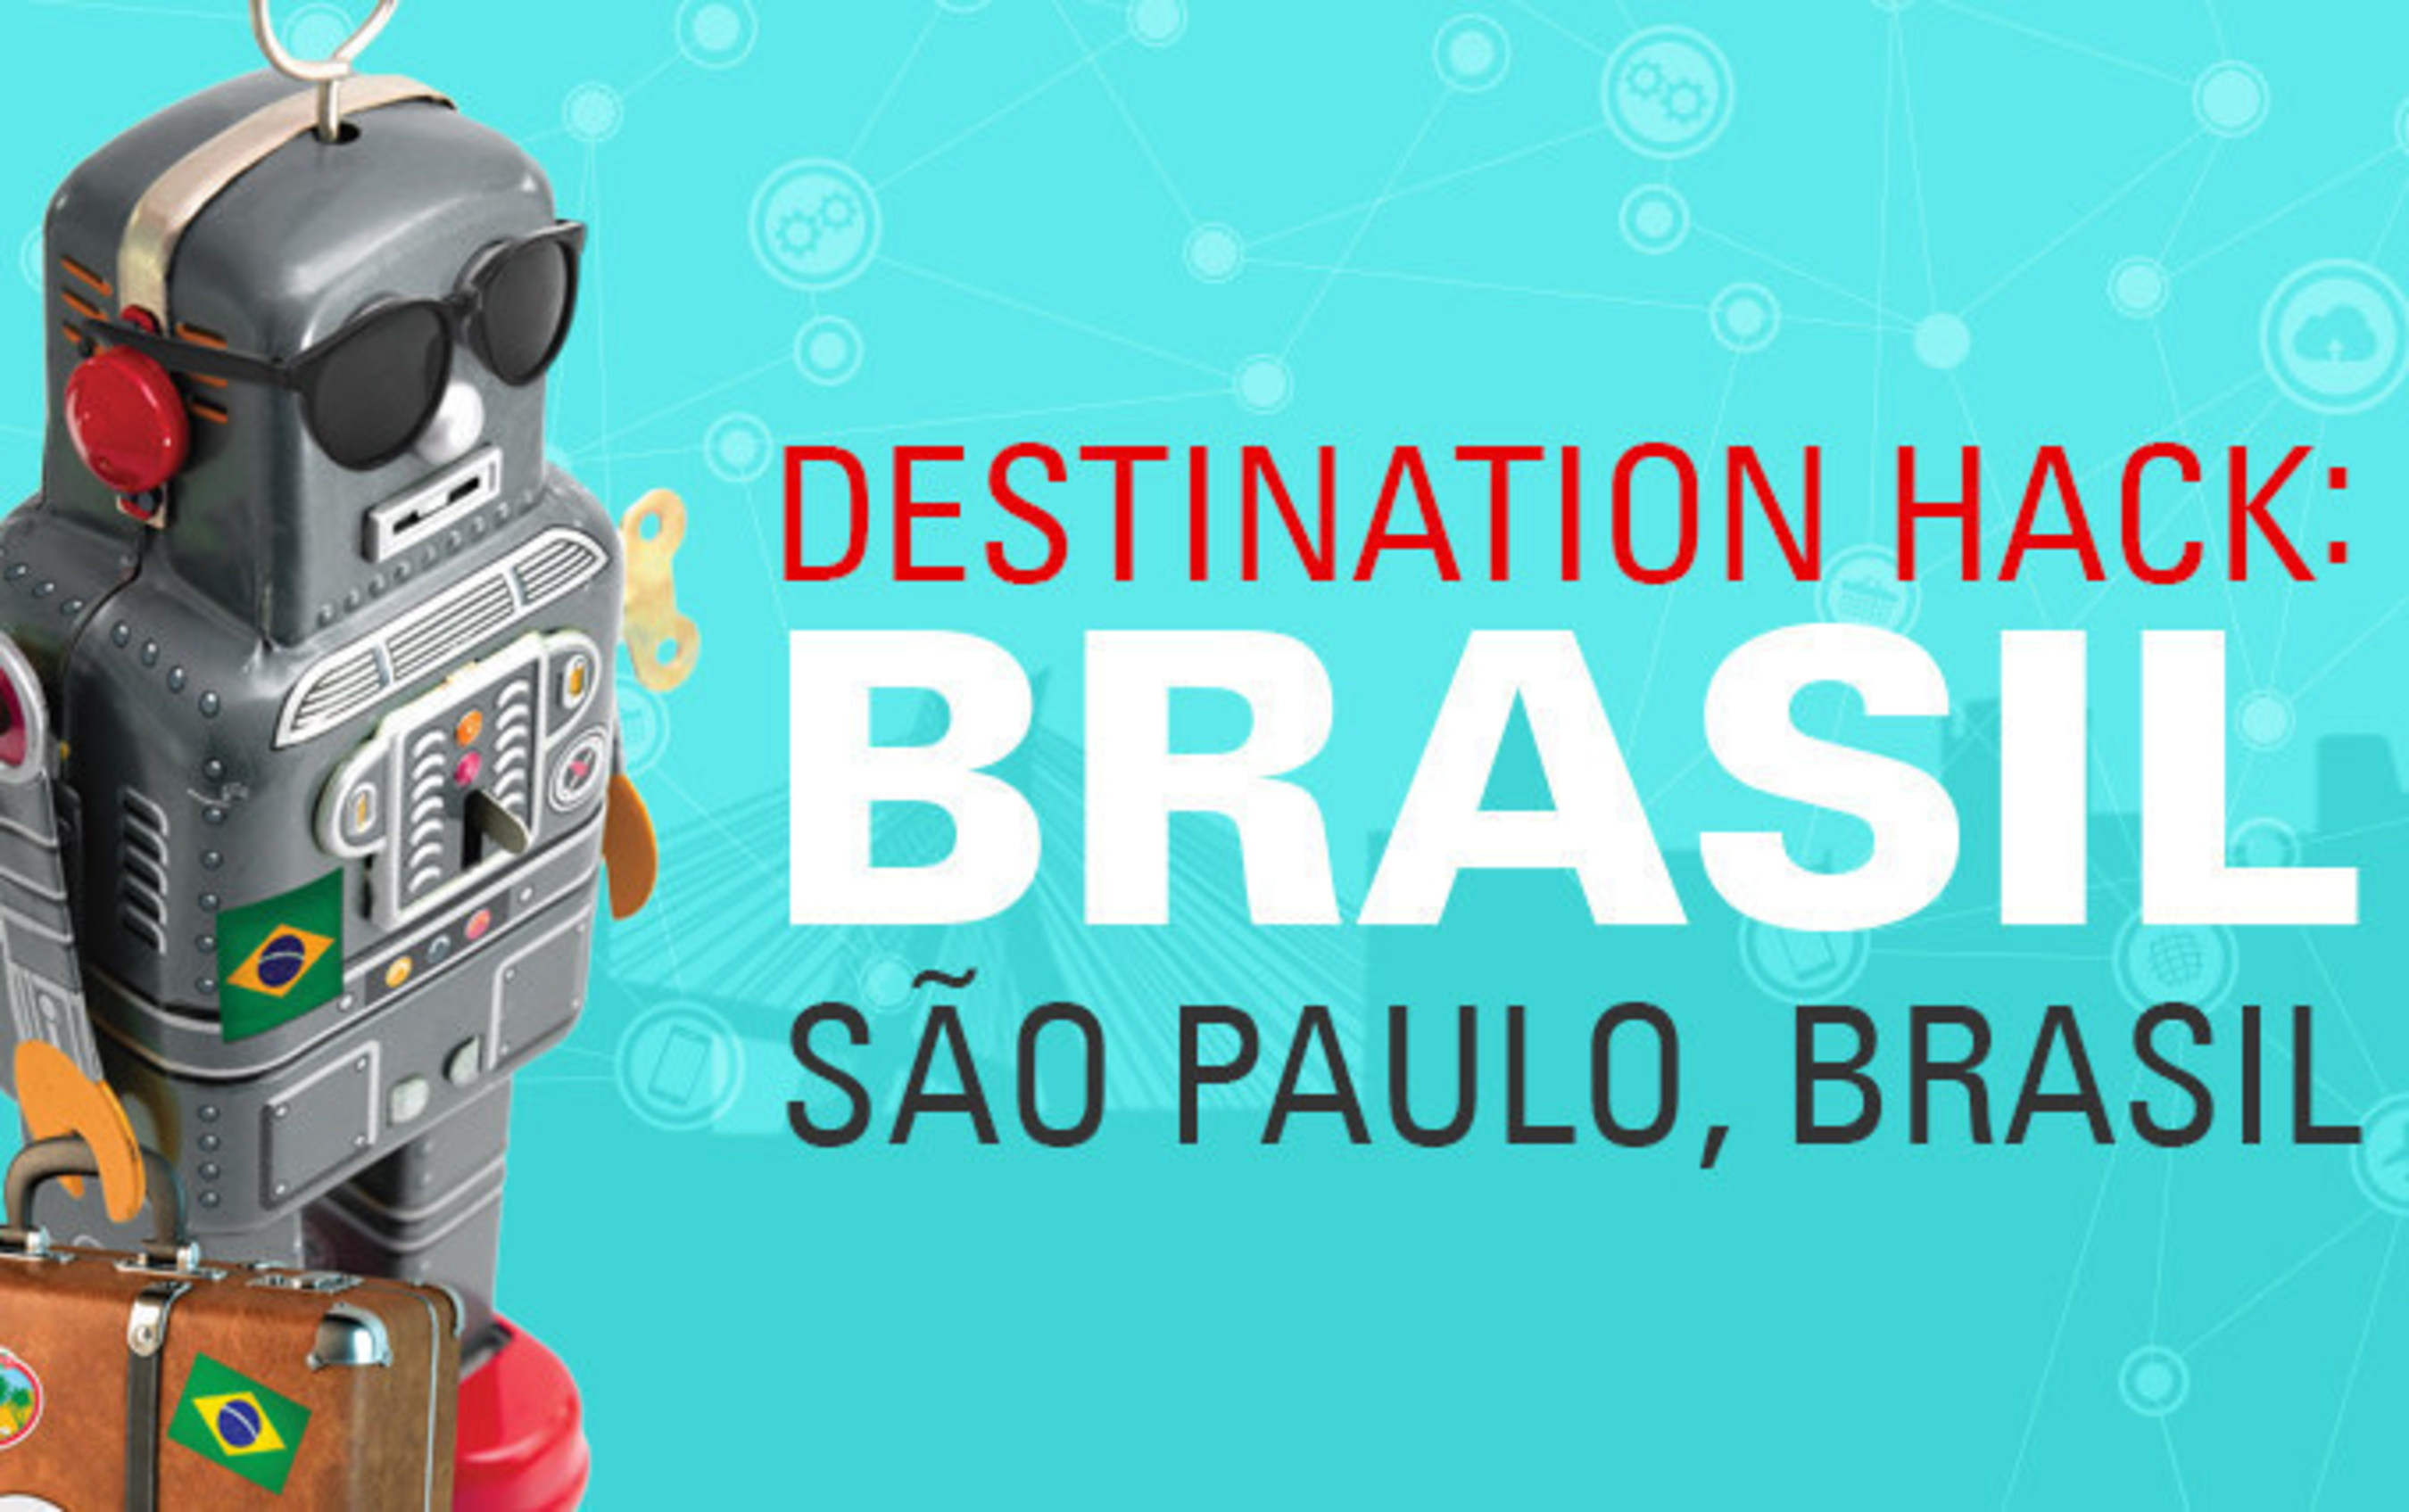 Sabre brings the world's first travel technology hackathon #DestinationHack to Brazil